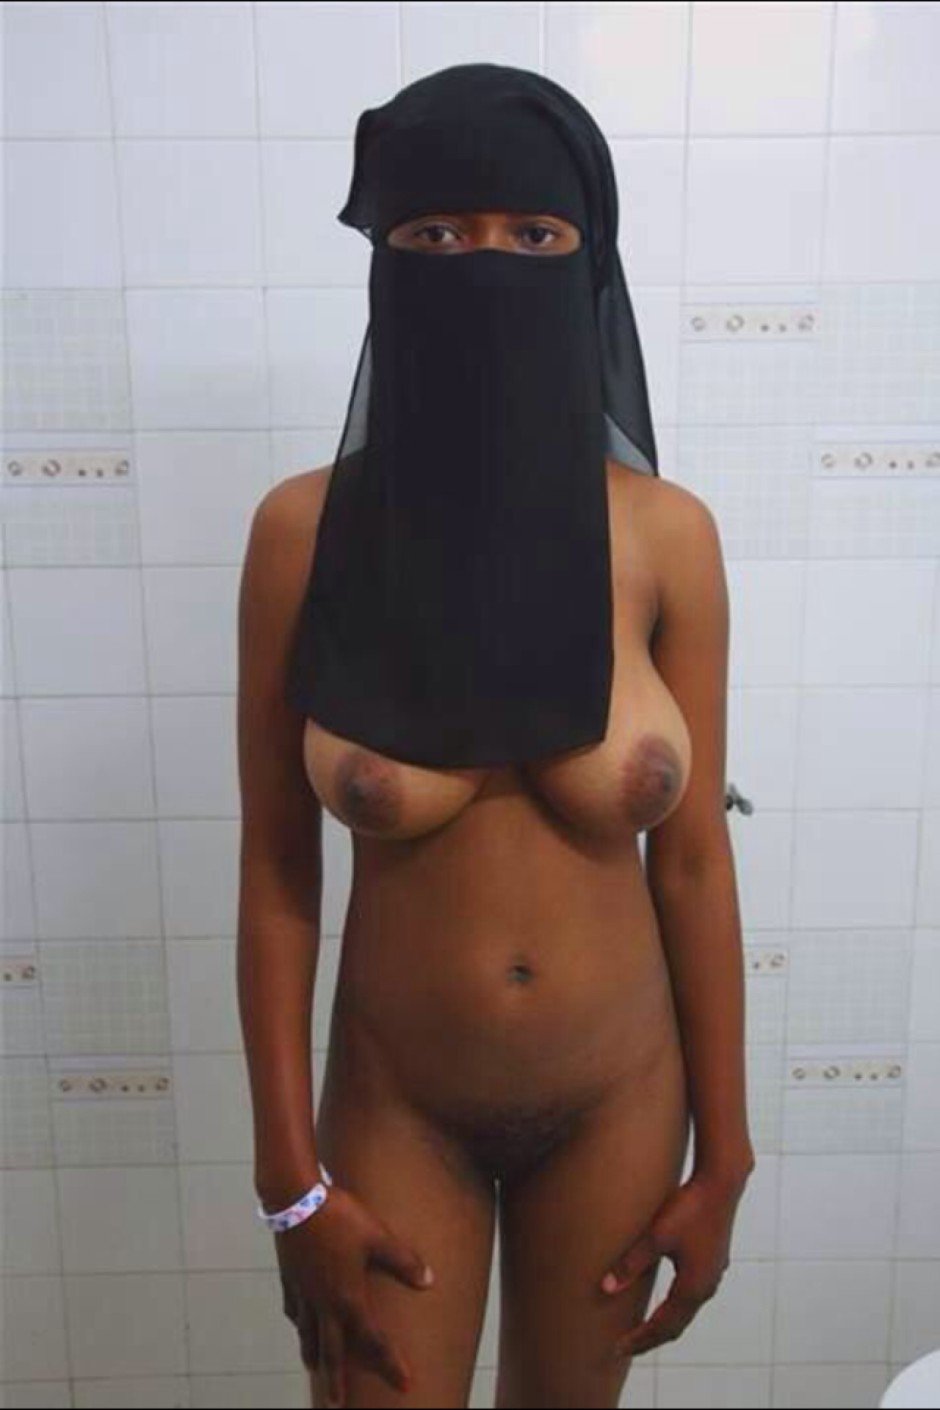 Huge Muslim Boobs - nude amateur arab muslim big tits girl â€“ GF PICS â€“ Free ...